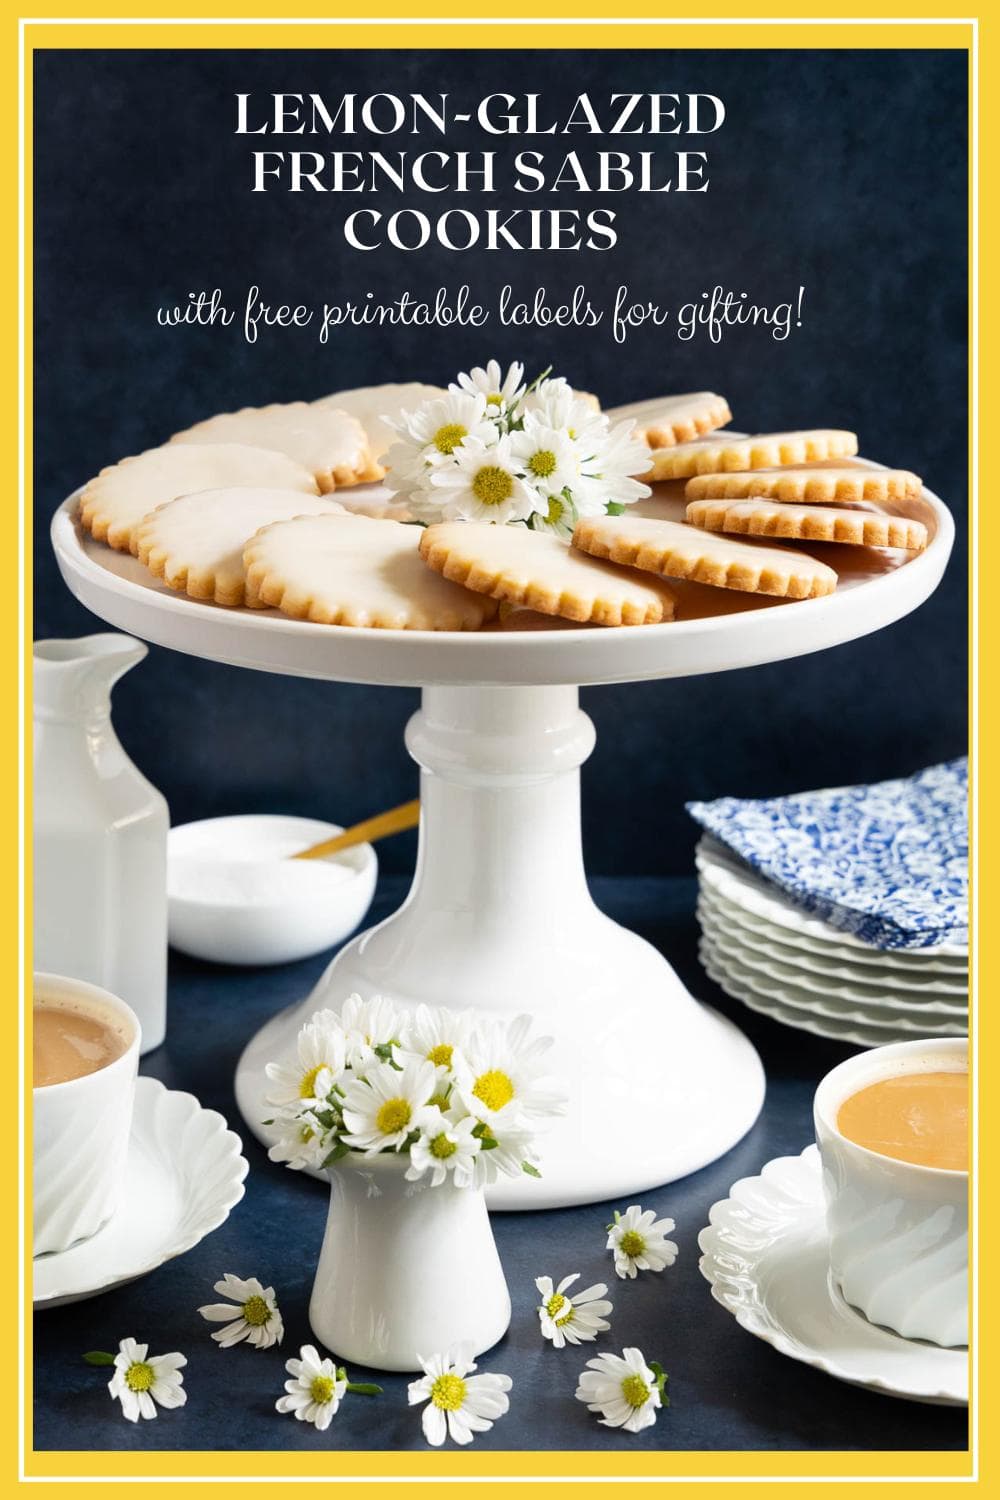 Lemon-Glazed French Sable Cookies